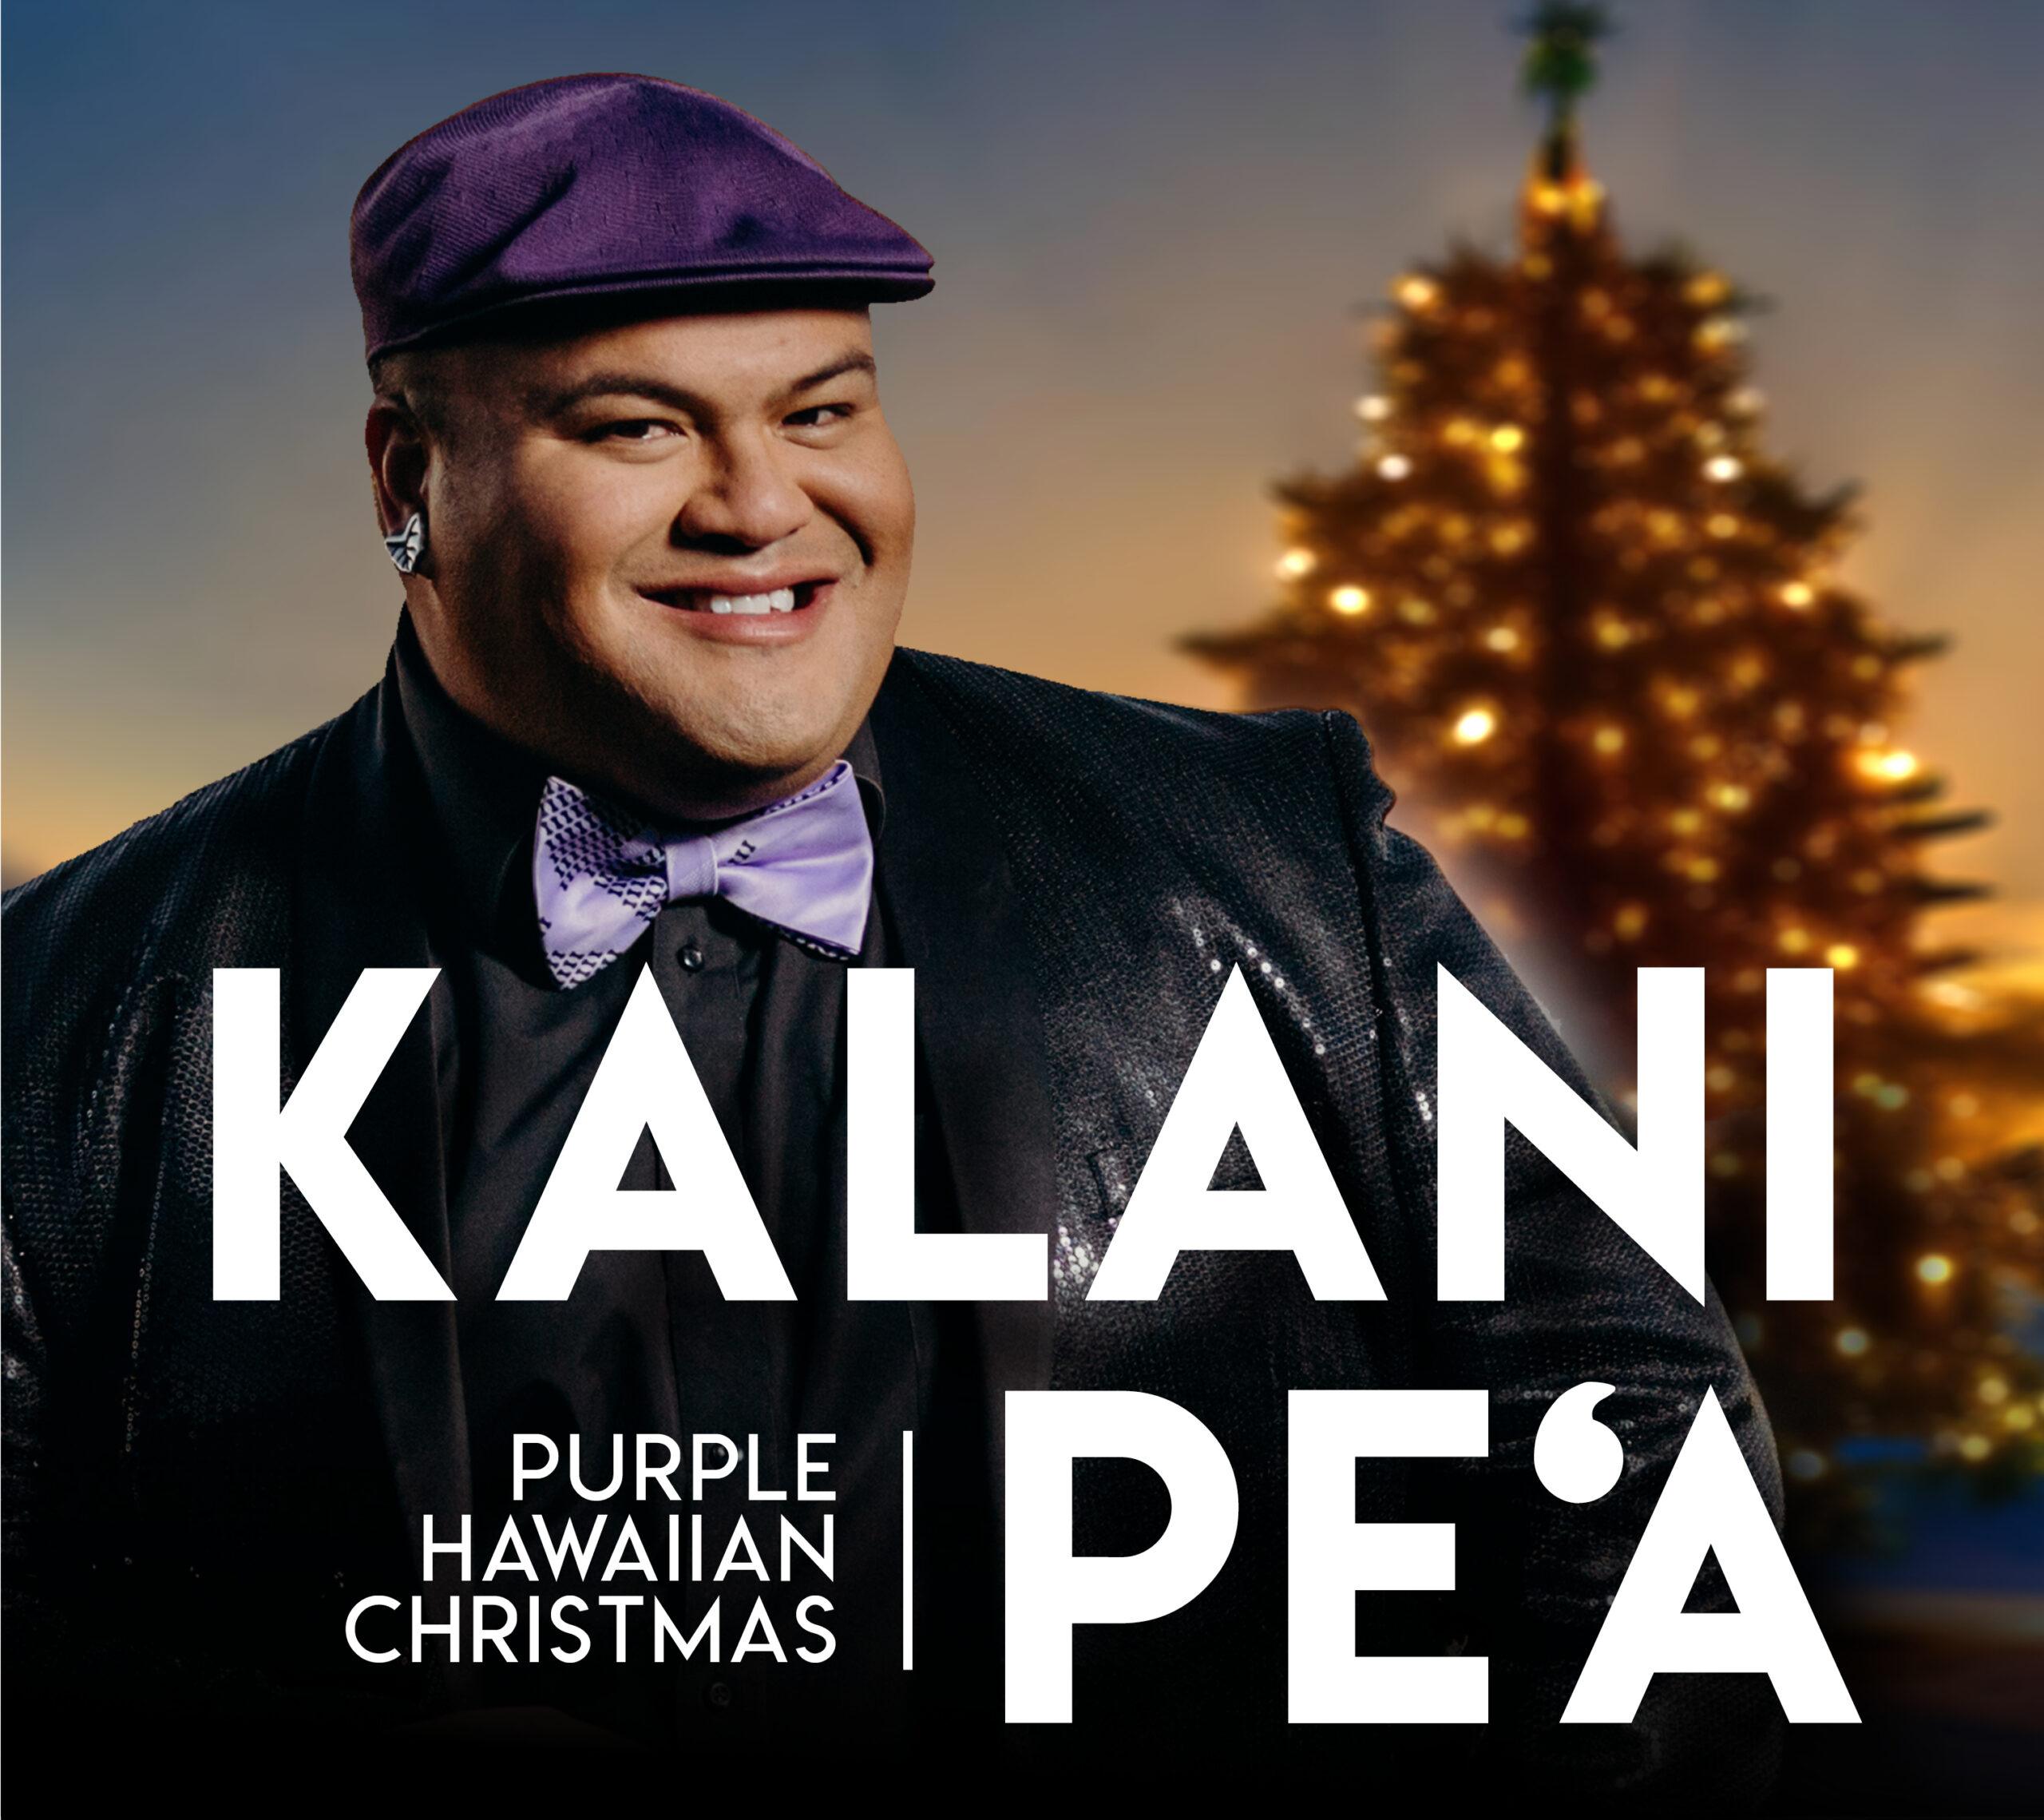 Kalani pea's purple hawaiian christmas.